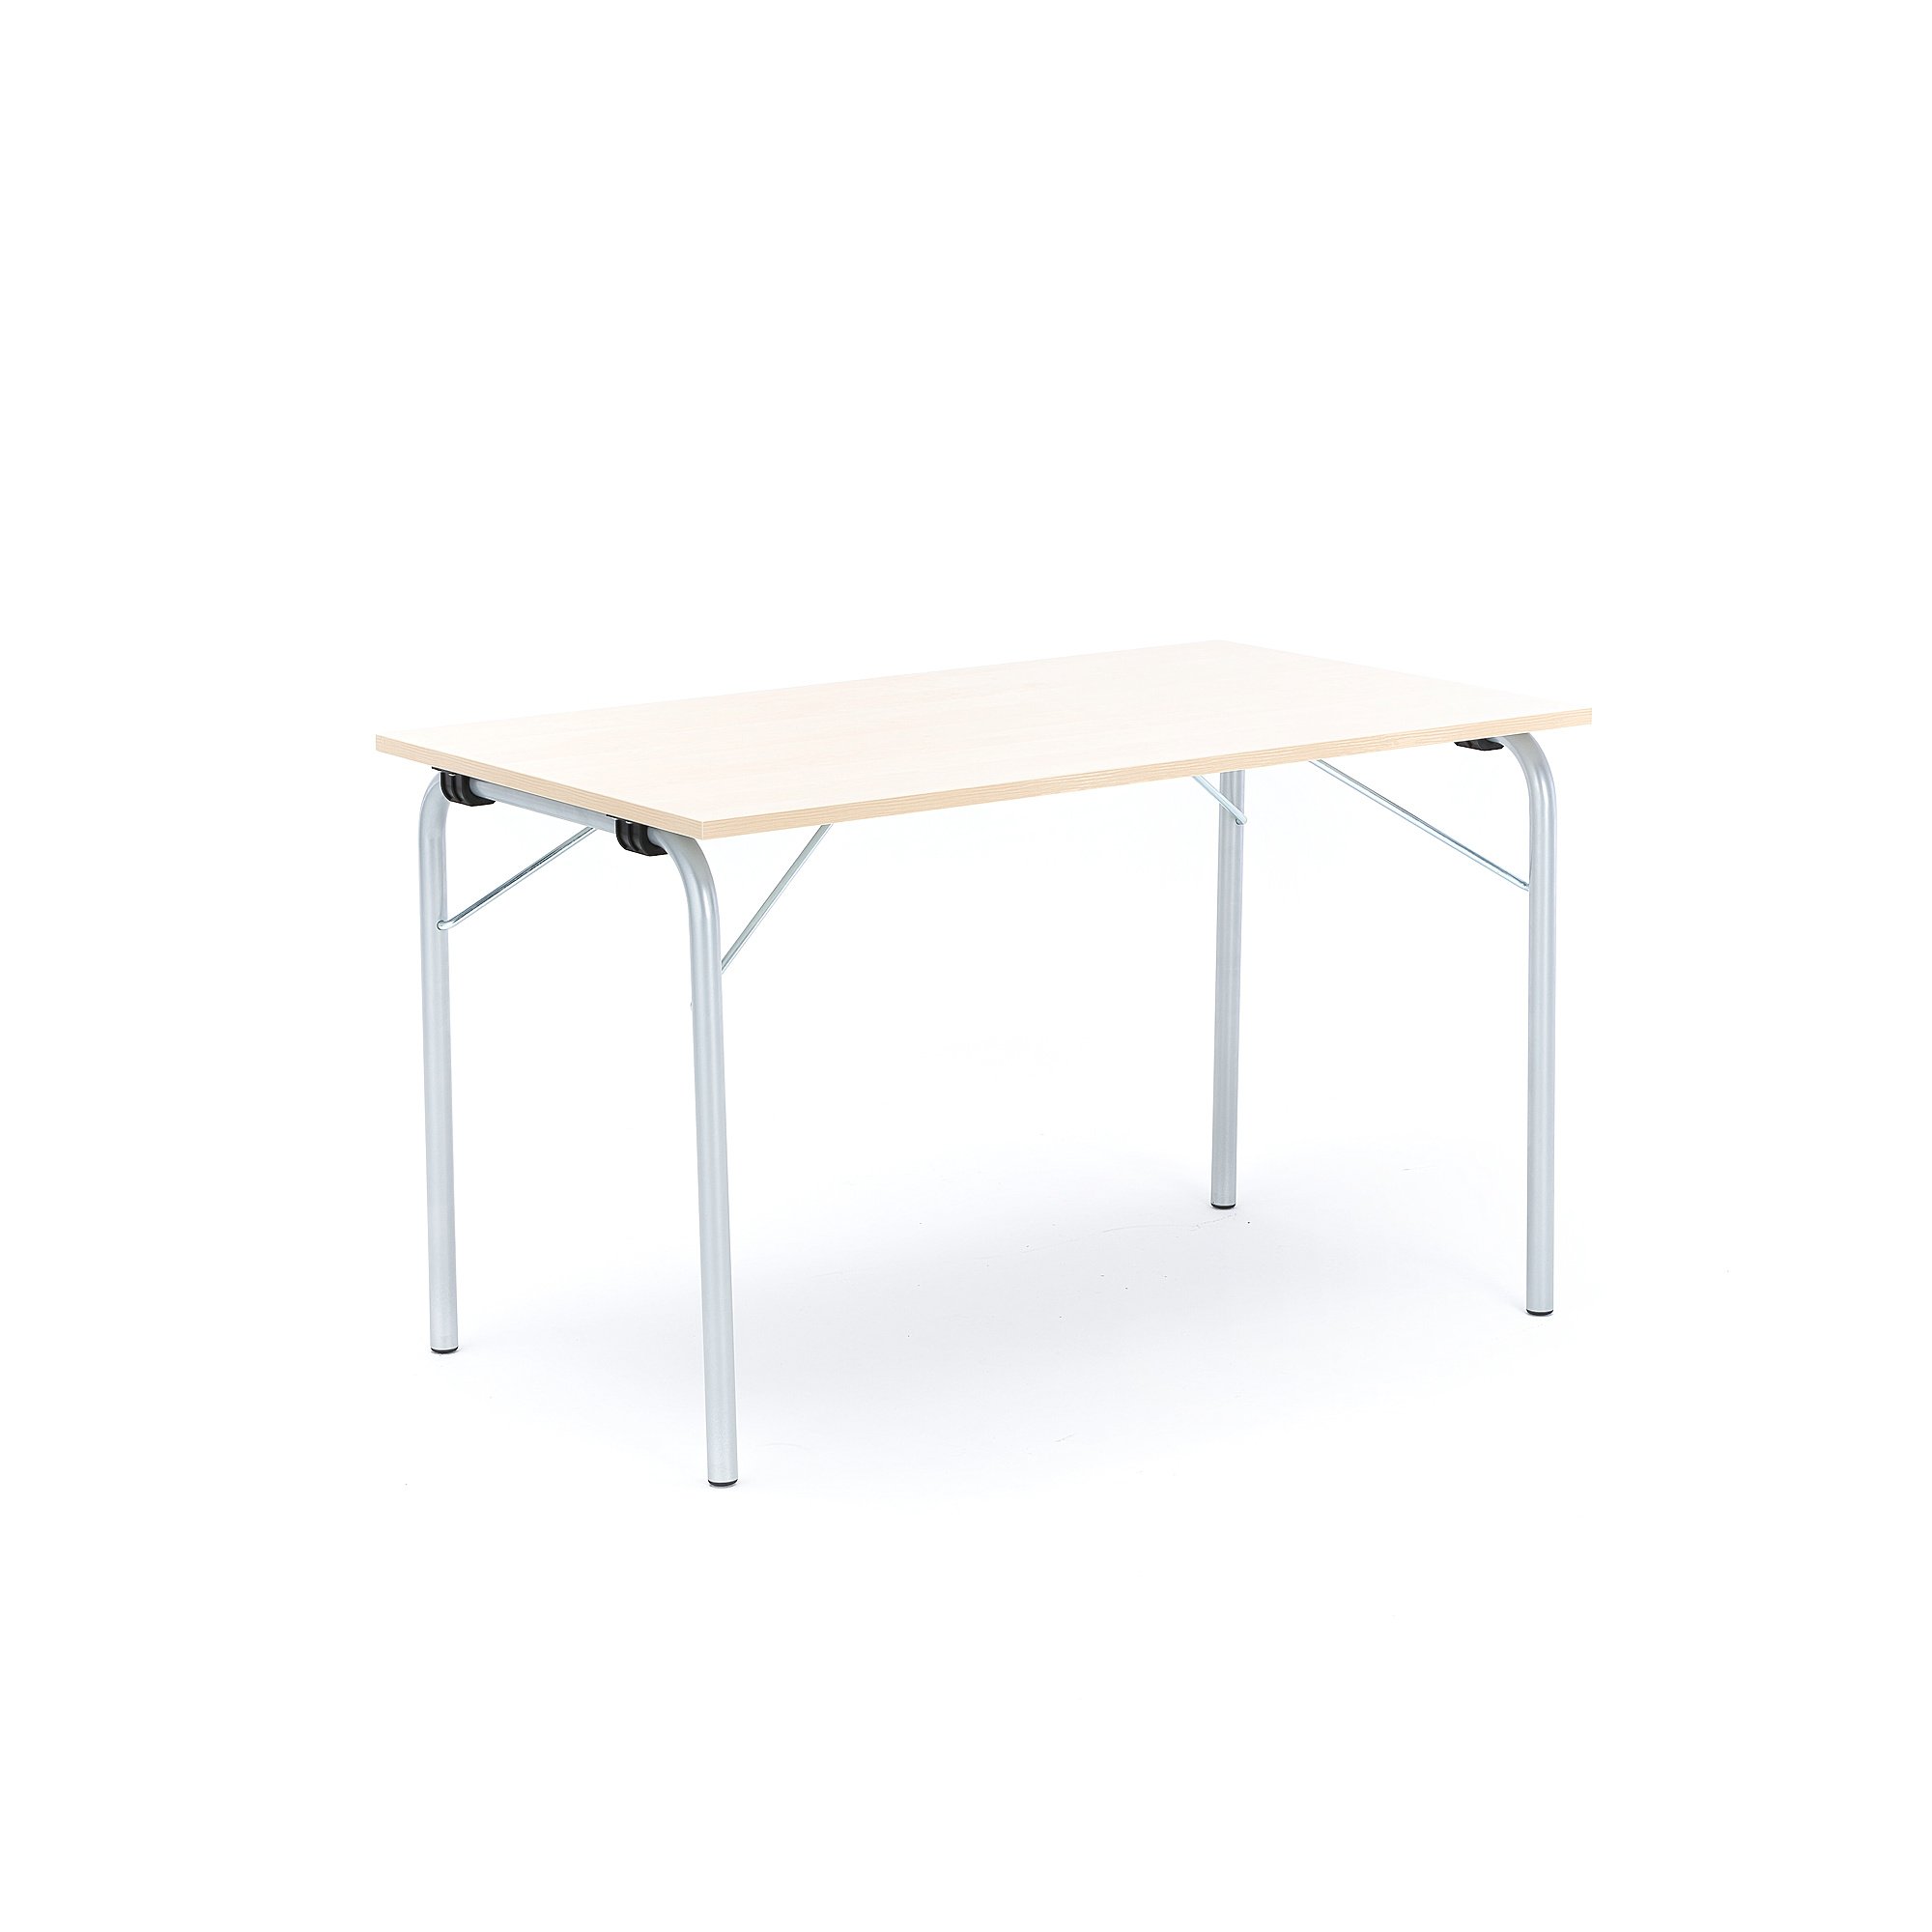 Skládací stůl NICKE, 1200x700x720 mm, stříbrný rám,lamino bříza